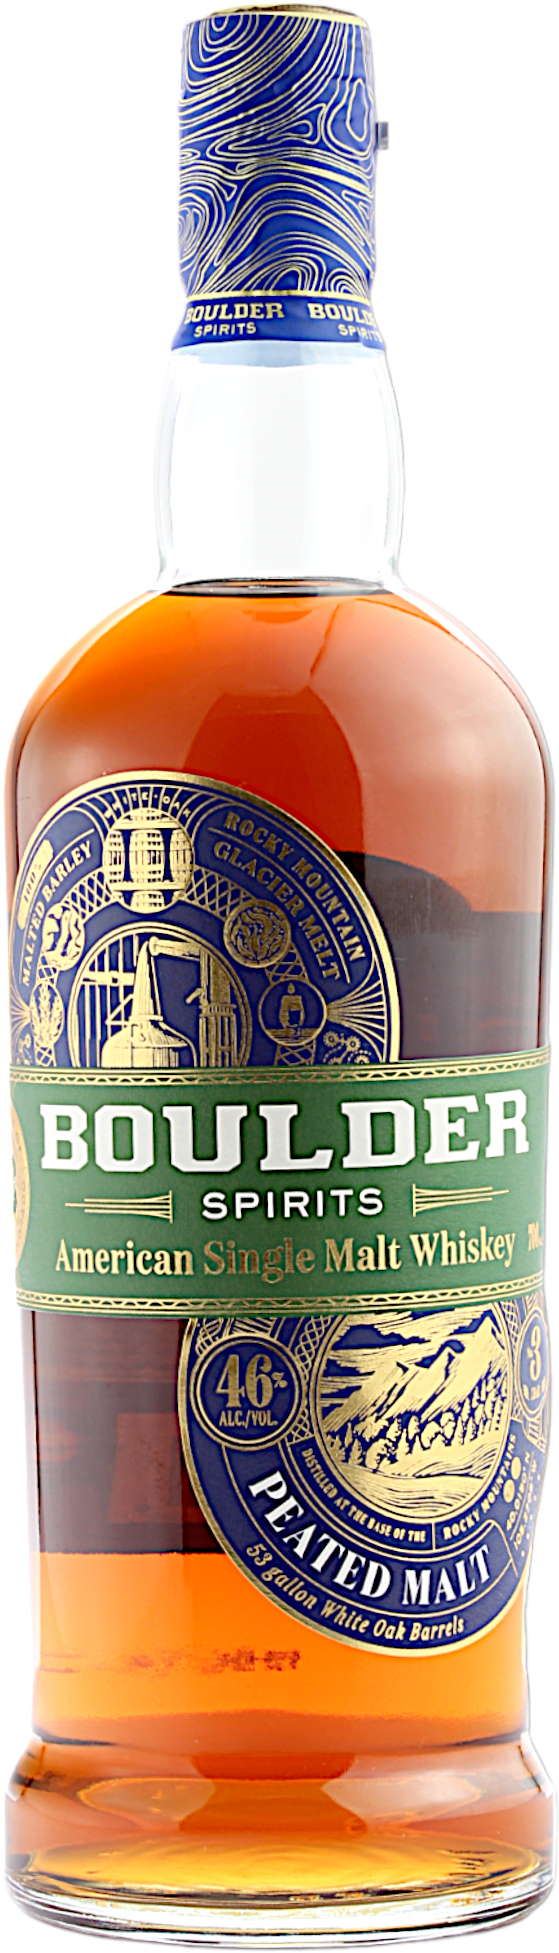 Boulder Spirits Peated Malt American Single Malt Whiskey 46.0% 0,7l